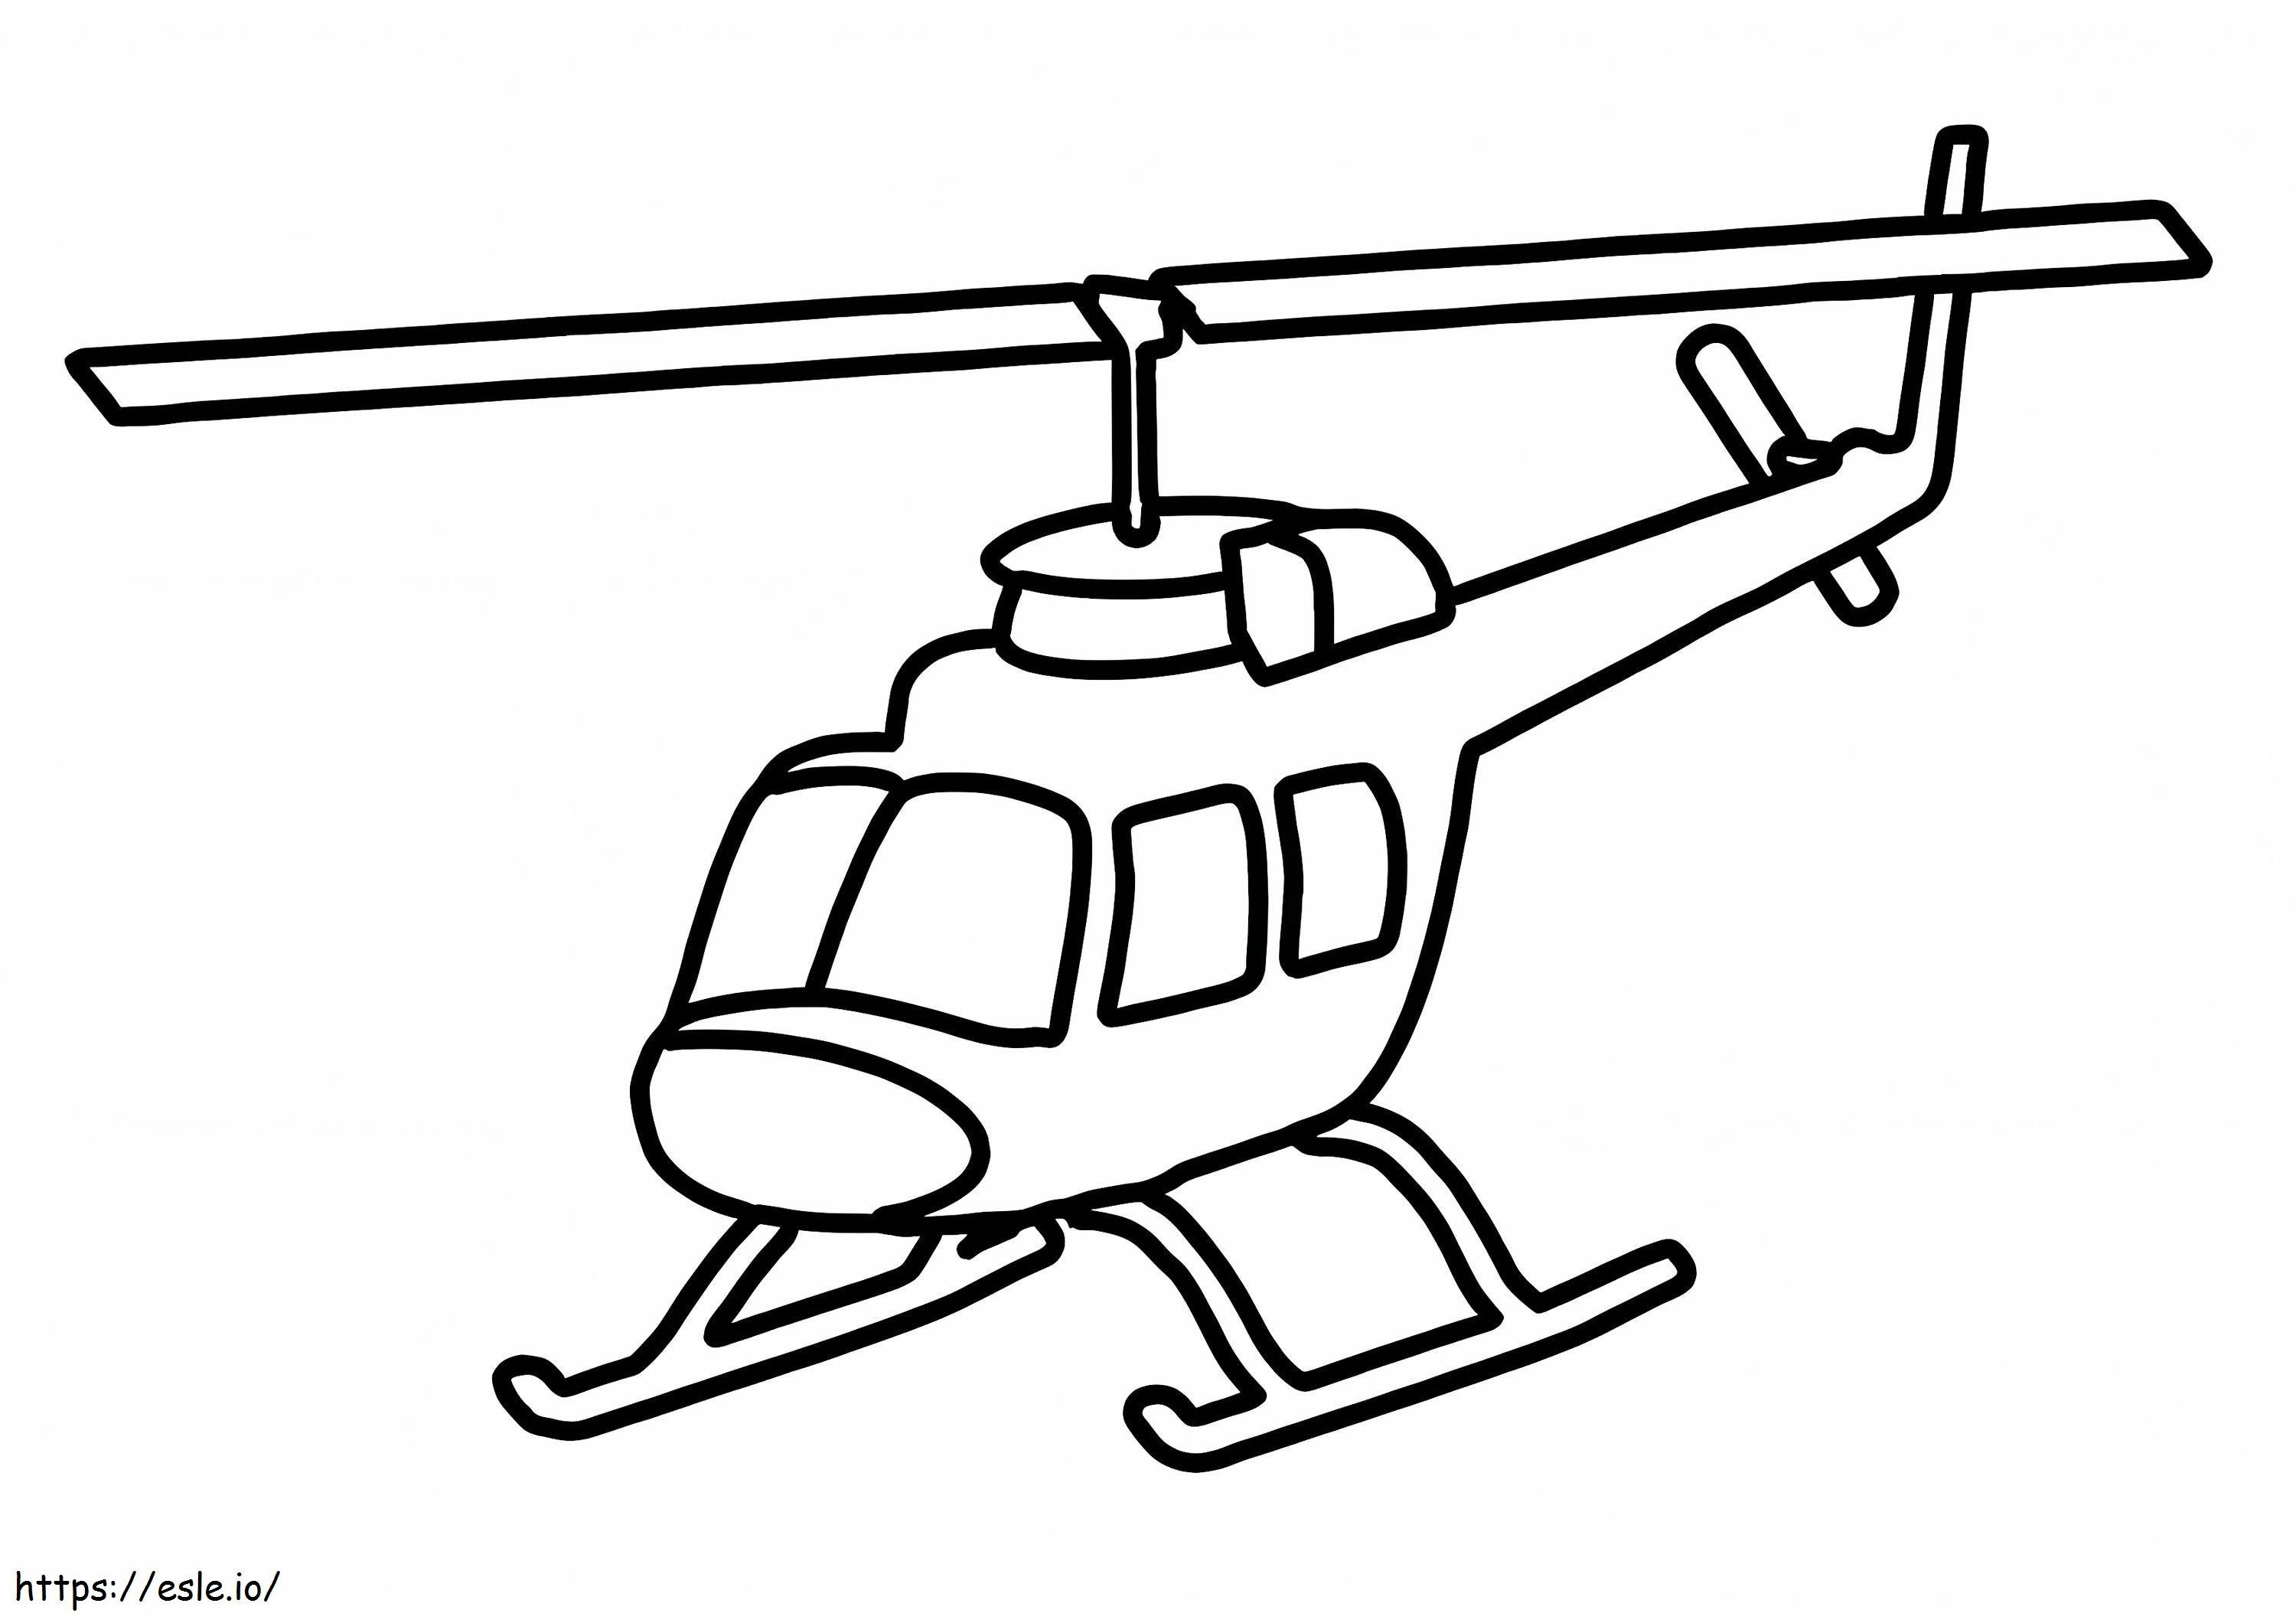 Increíble helicóptero para colorear